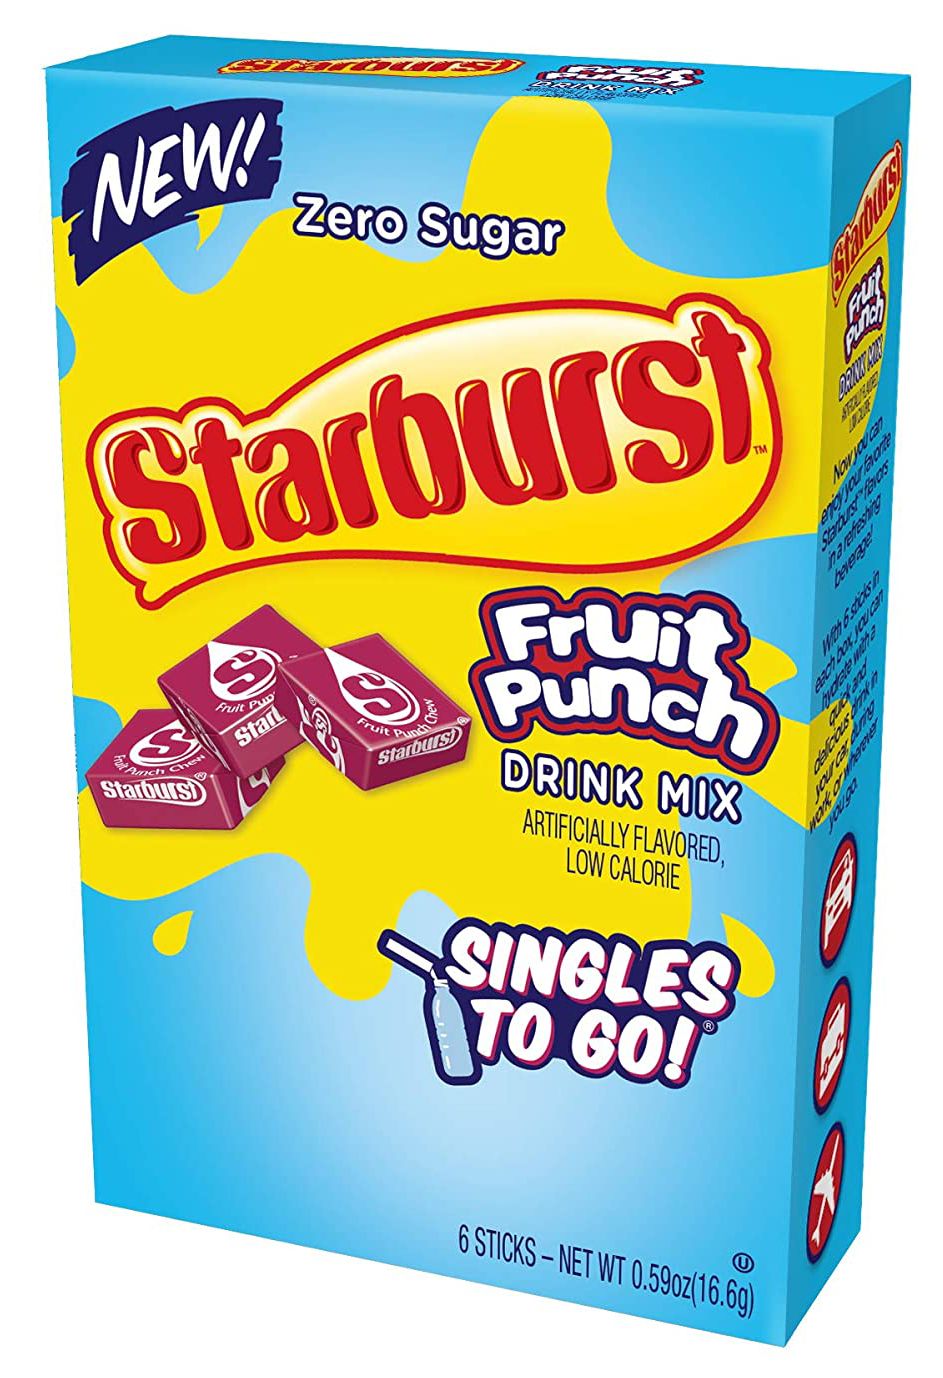 #Flavor_Fruit Punch #Size_6 sticks